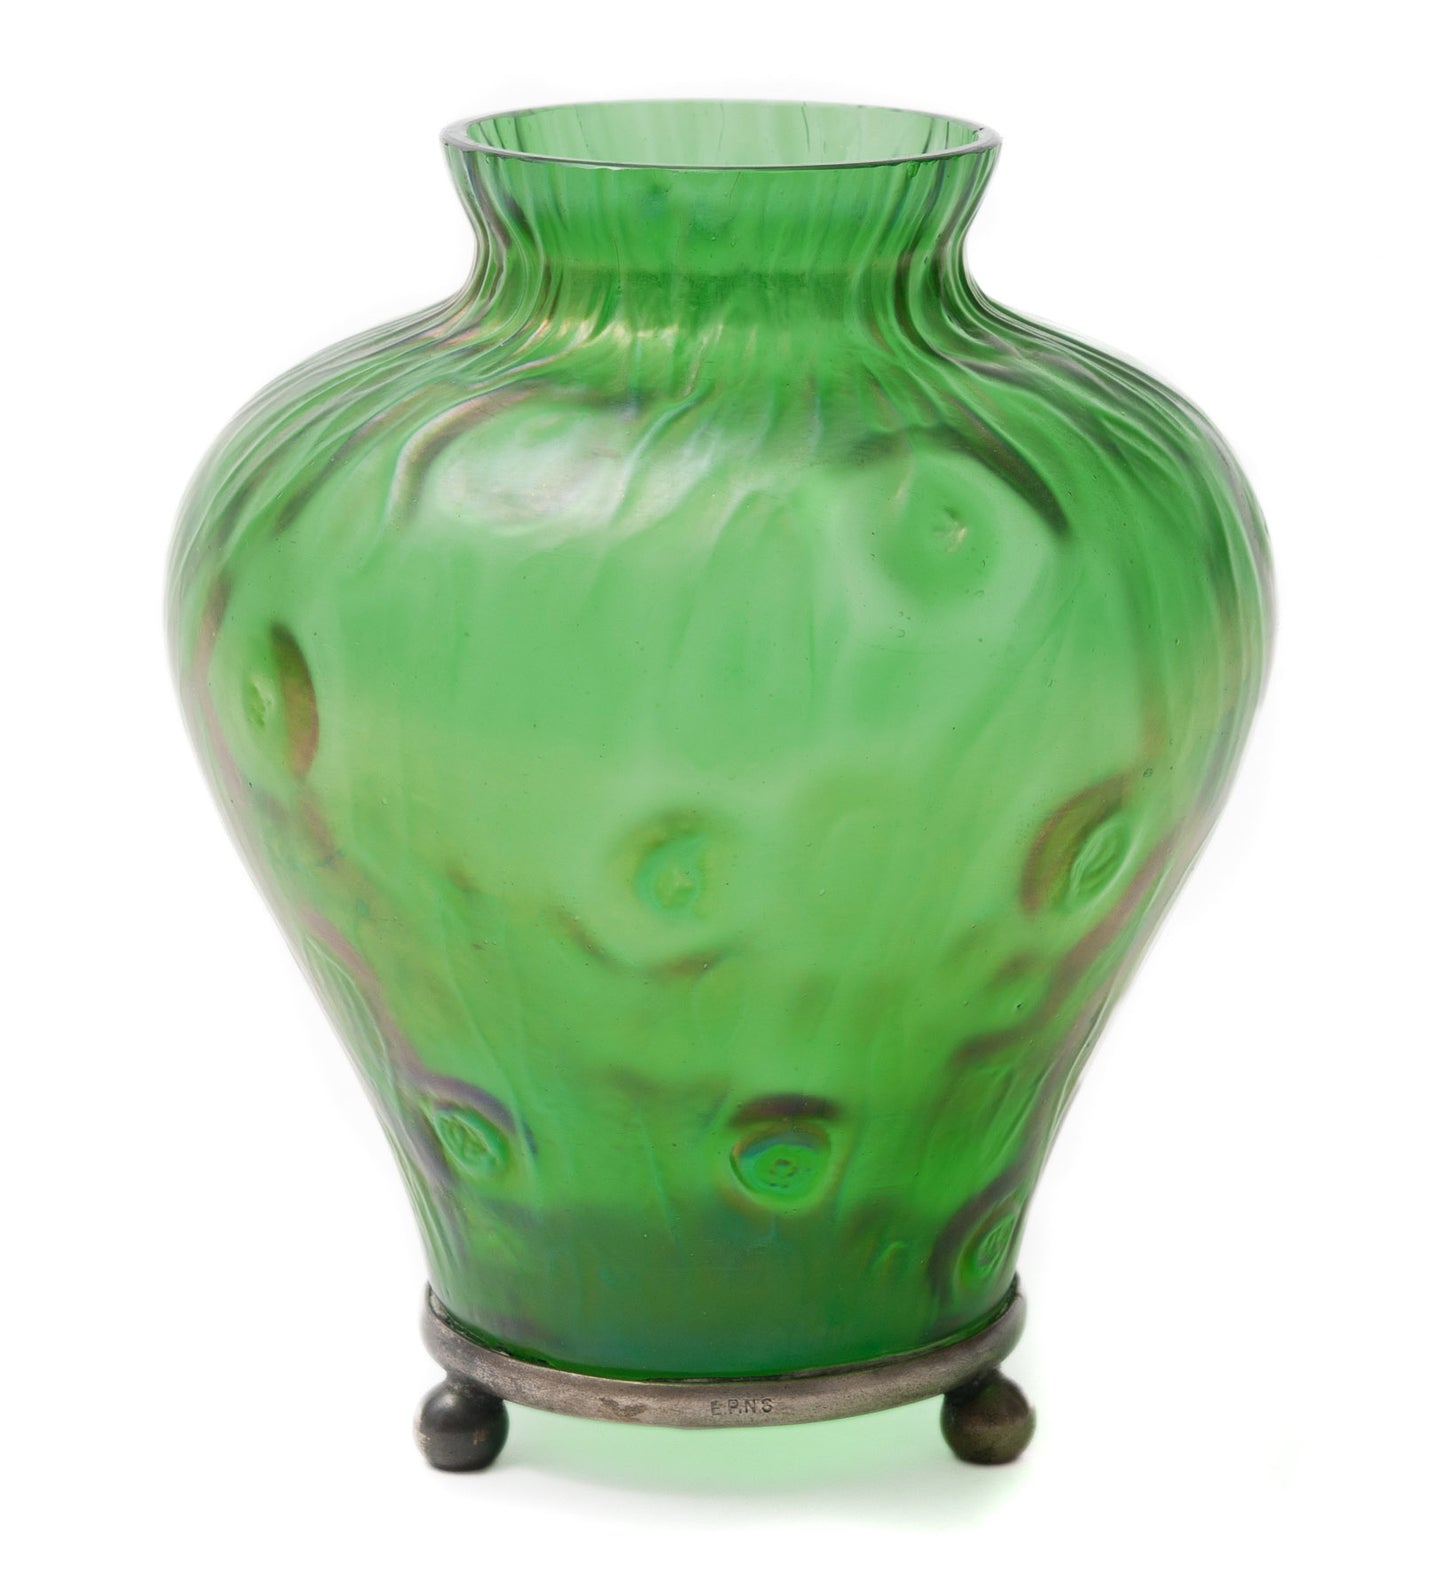 Loetz Art Nouveau Rusticana Iridescent Glass Vase With Silver Plated Mount (Code 0713)